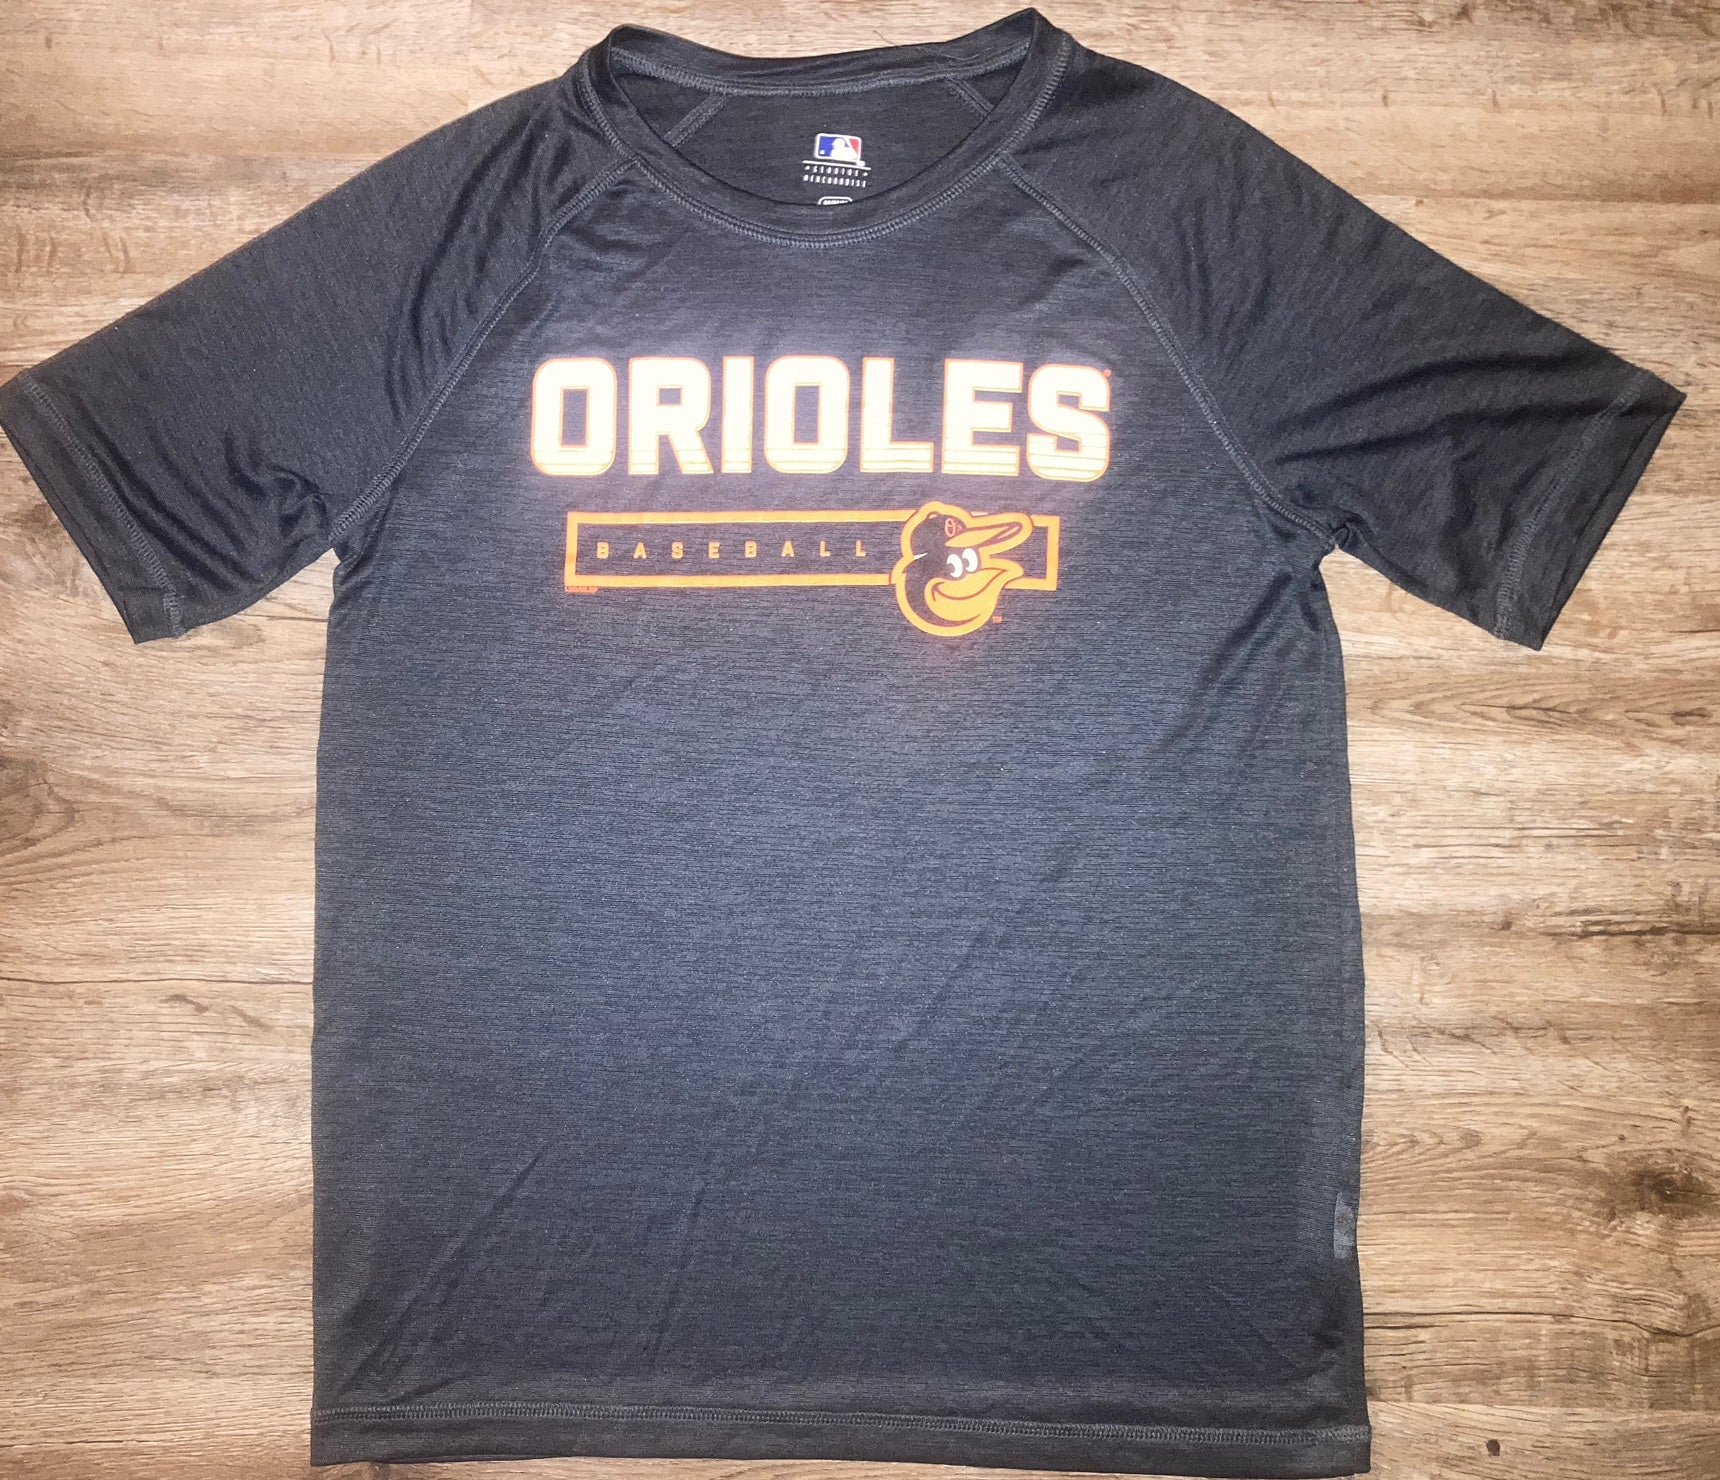 Medium) New Baltimore Orioles Dry Fit Shirt